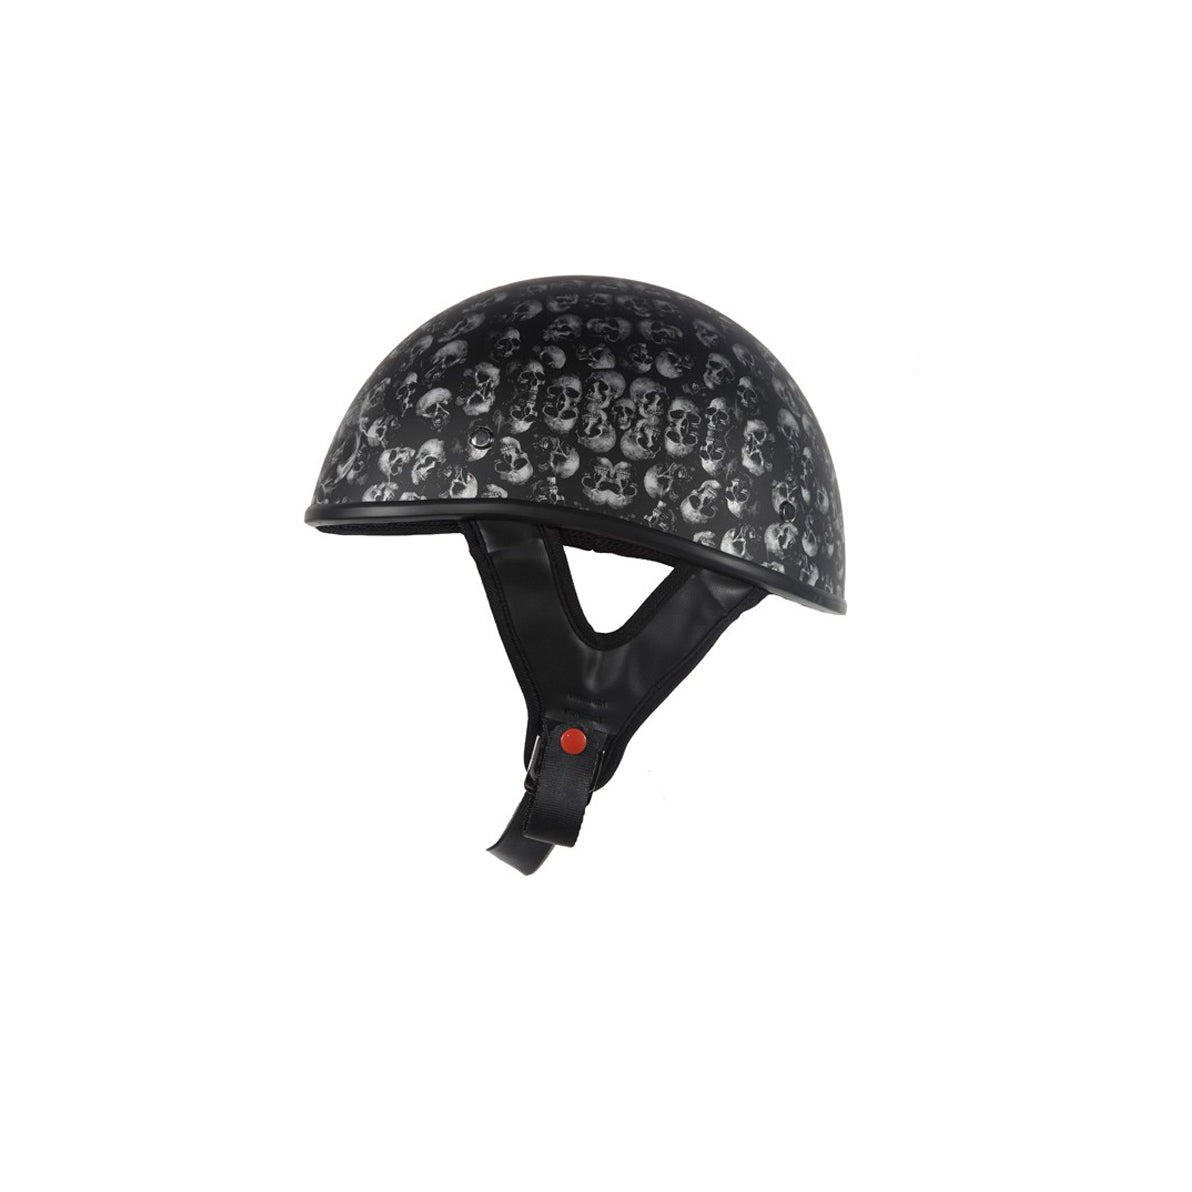 DOT Low Profile Motorcycle Helmet With Skulls Graphic